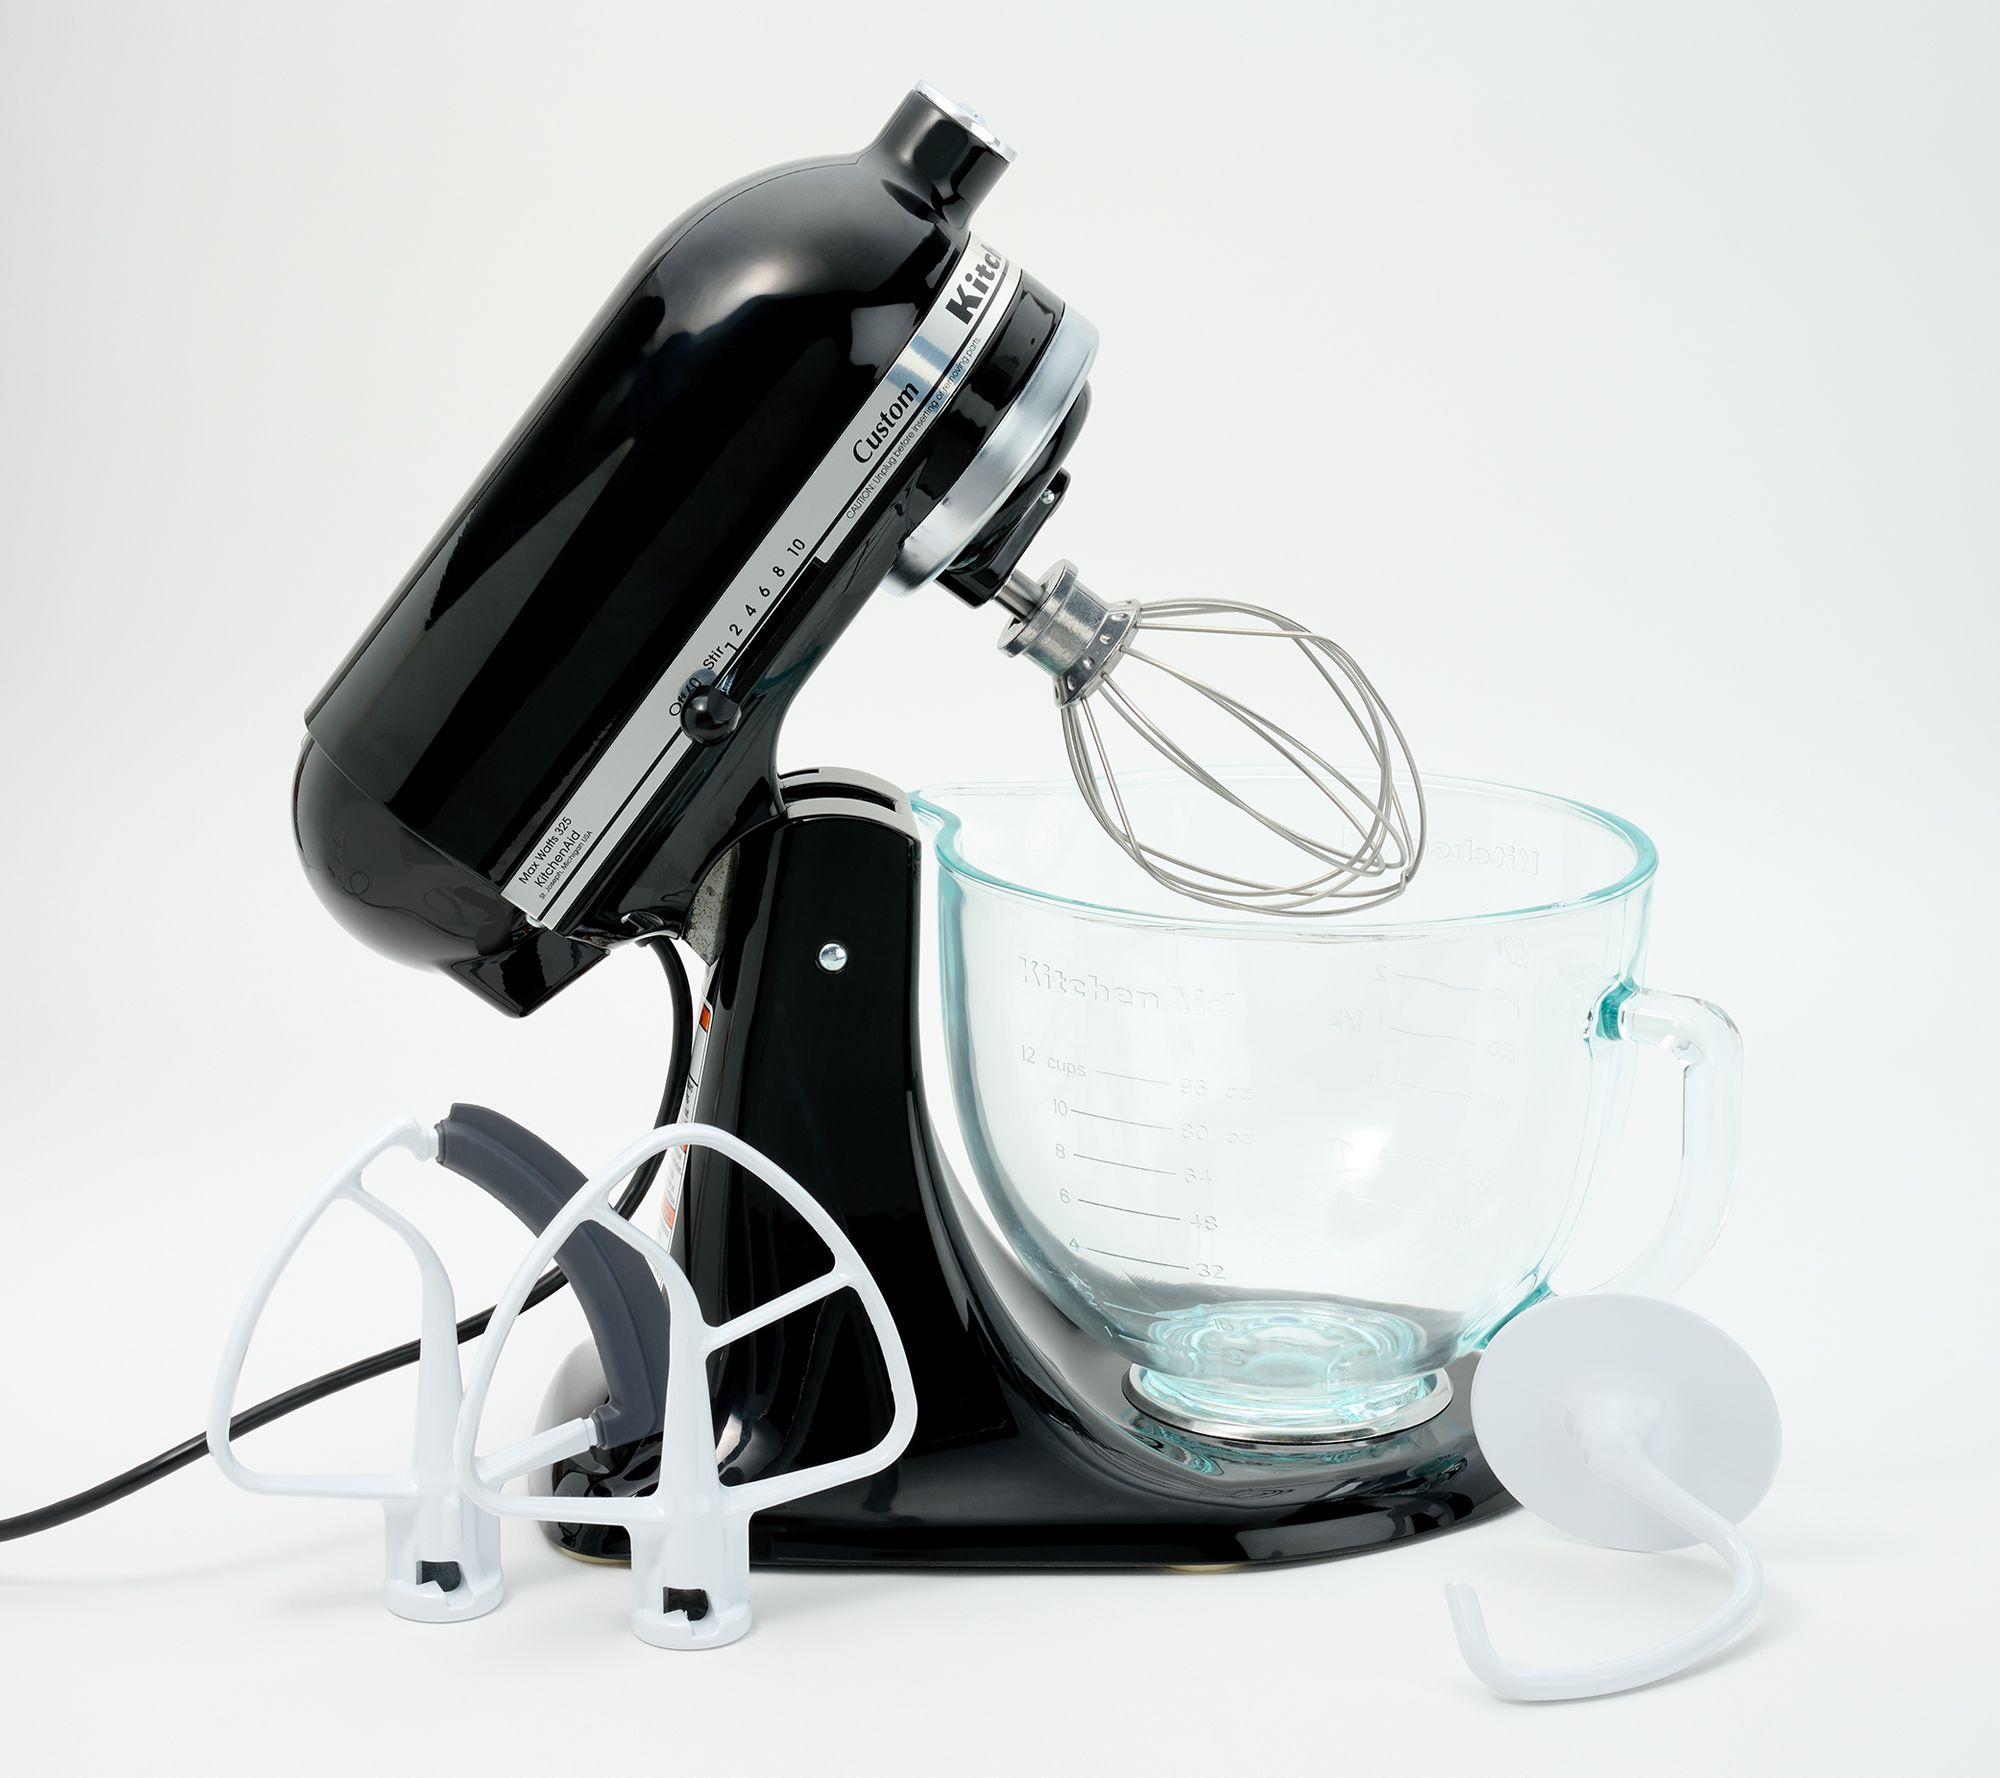 KitchenAid 5-Quart Stand Mixer Glass Bowl Onxy Black